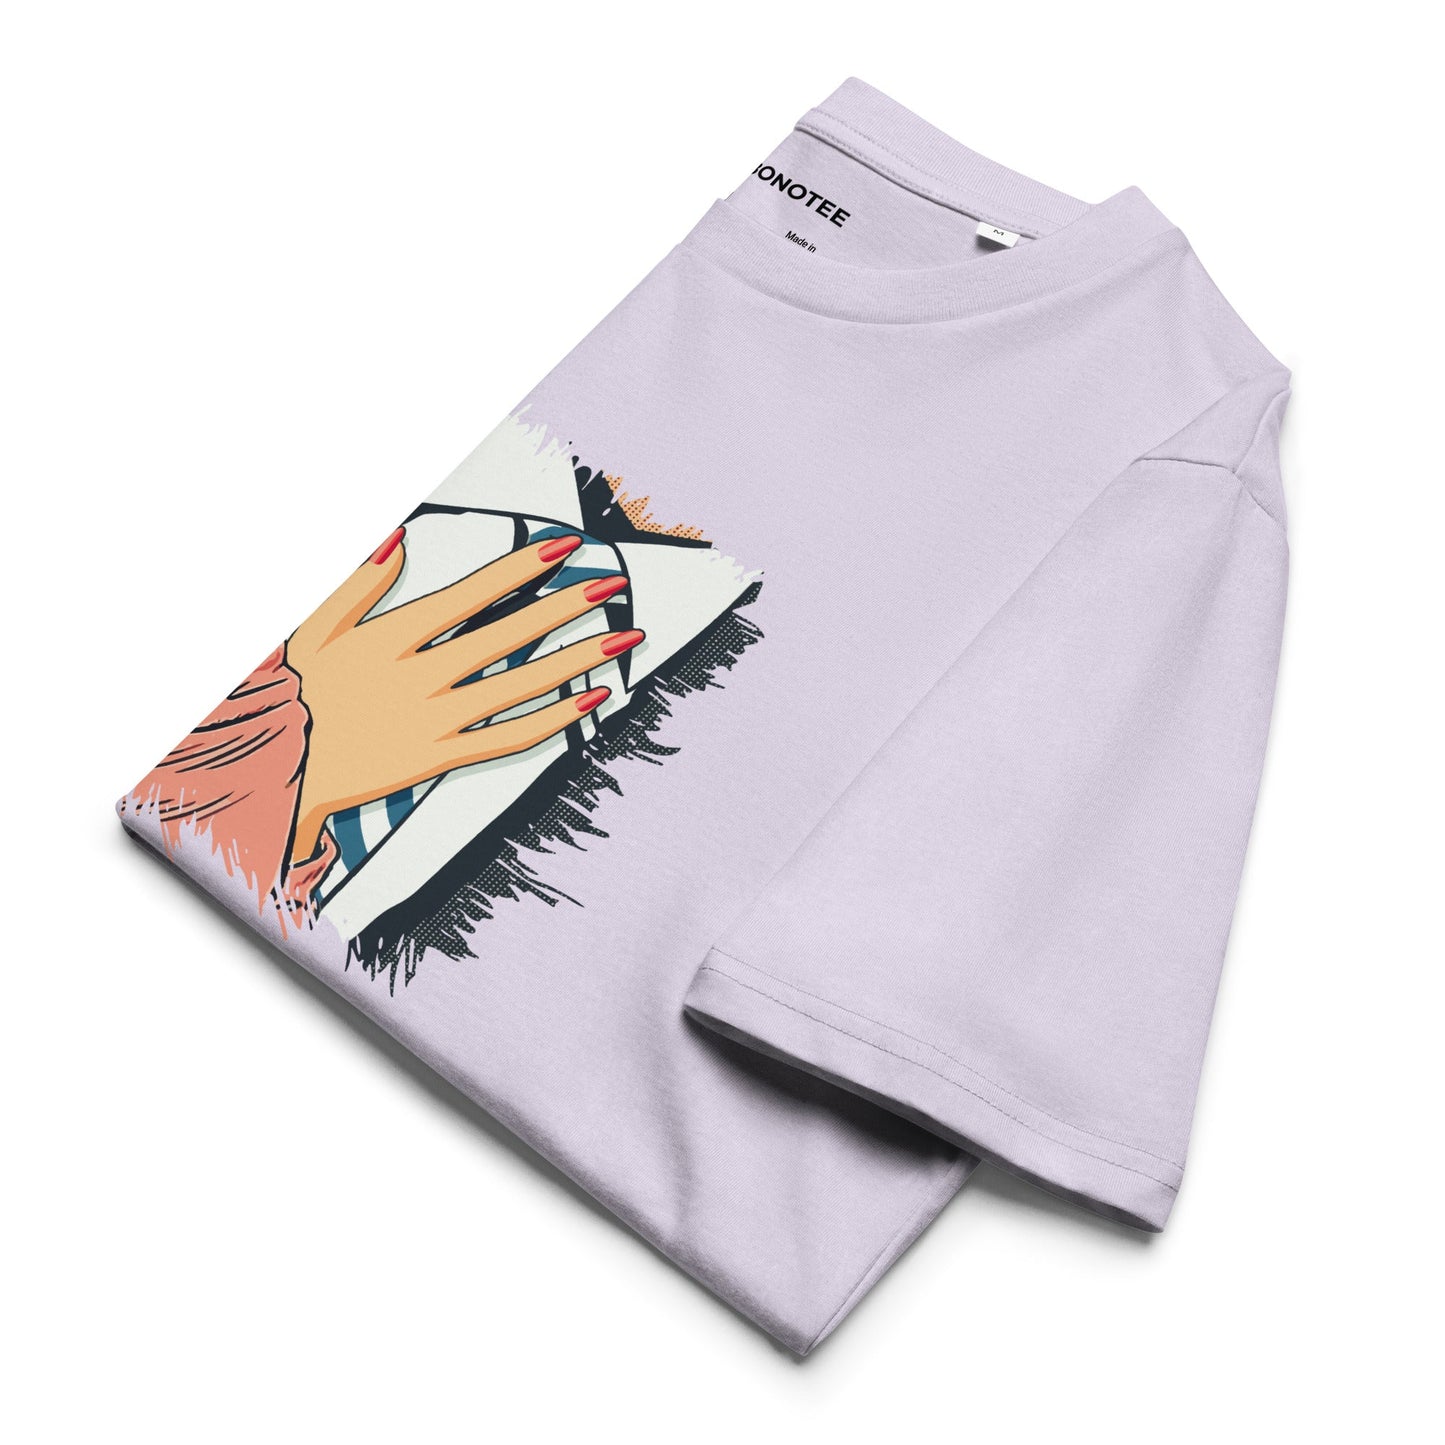 Short Sleeve Women's Organic T - Shirt ROMANTIC COUPLES 3 - BONOTEE